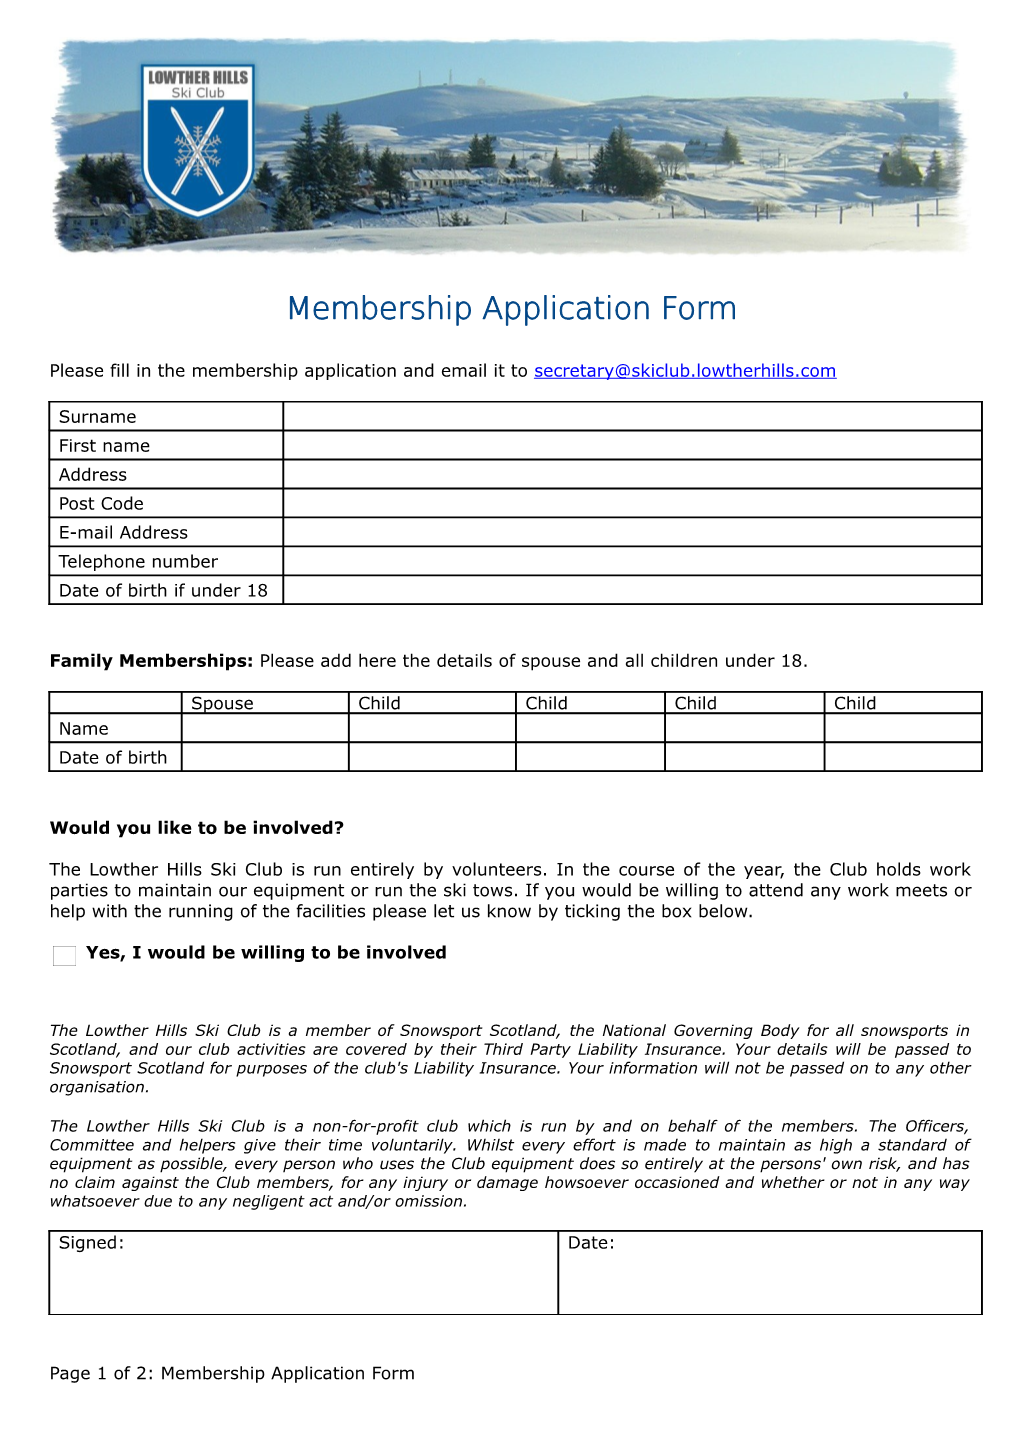 Membership Application Form - Lowther Hills Ski Club